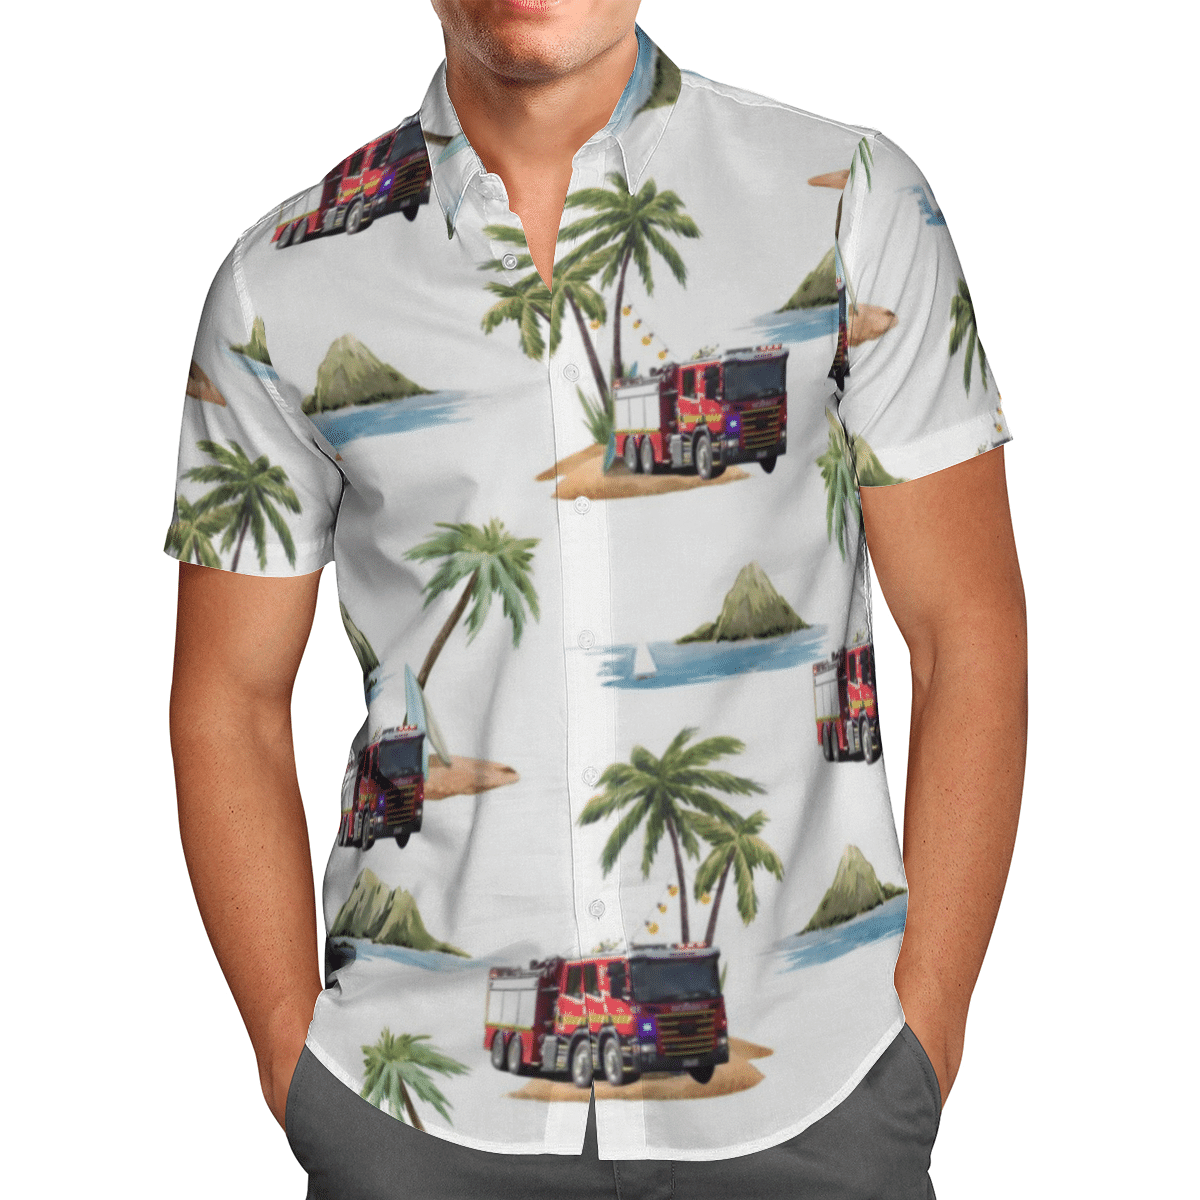 Enjoy your summer with top cool hawaiian shirt below 115